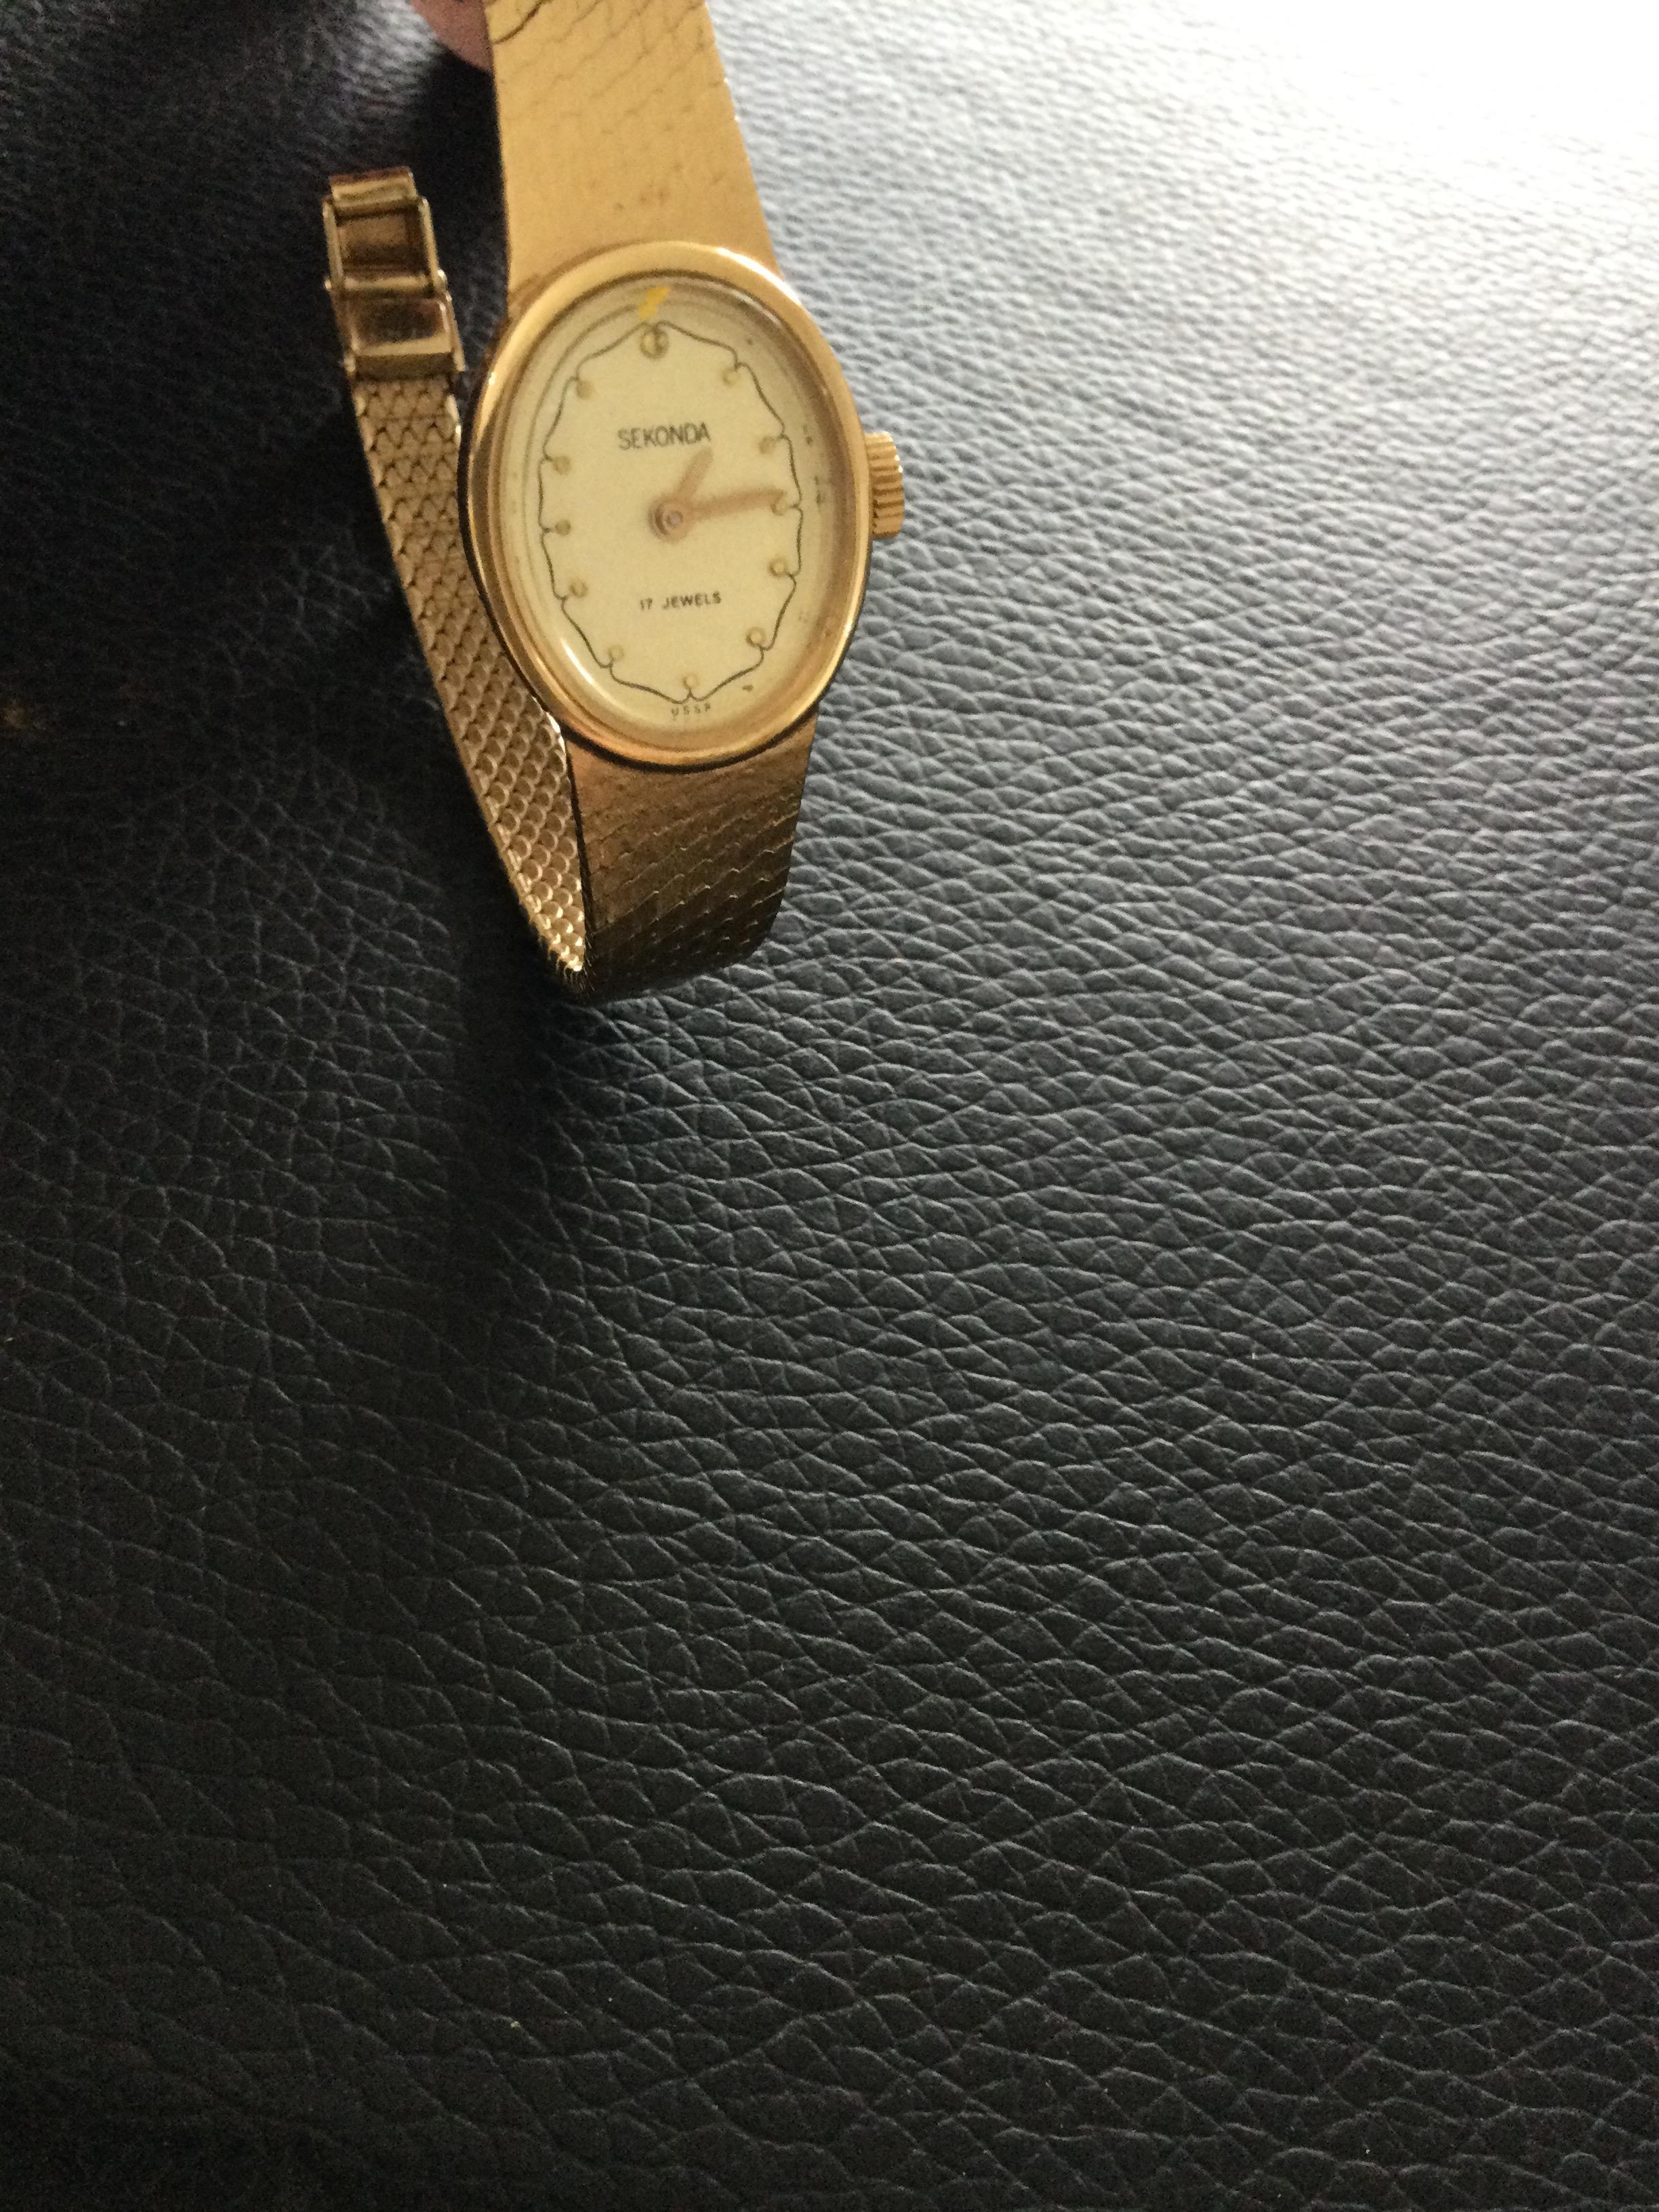 Sekonda 17 Jewel Ladies Wristwatch (Gs53) - Image 2 of 6